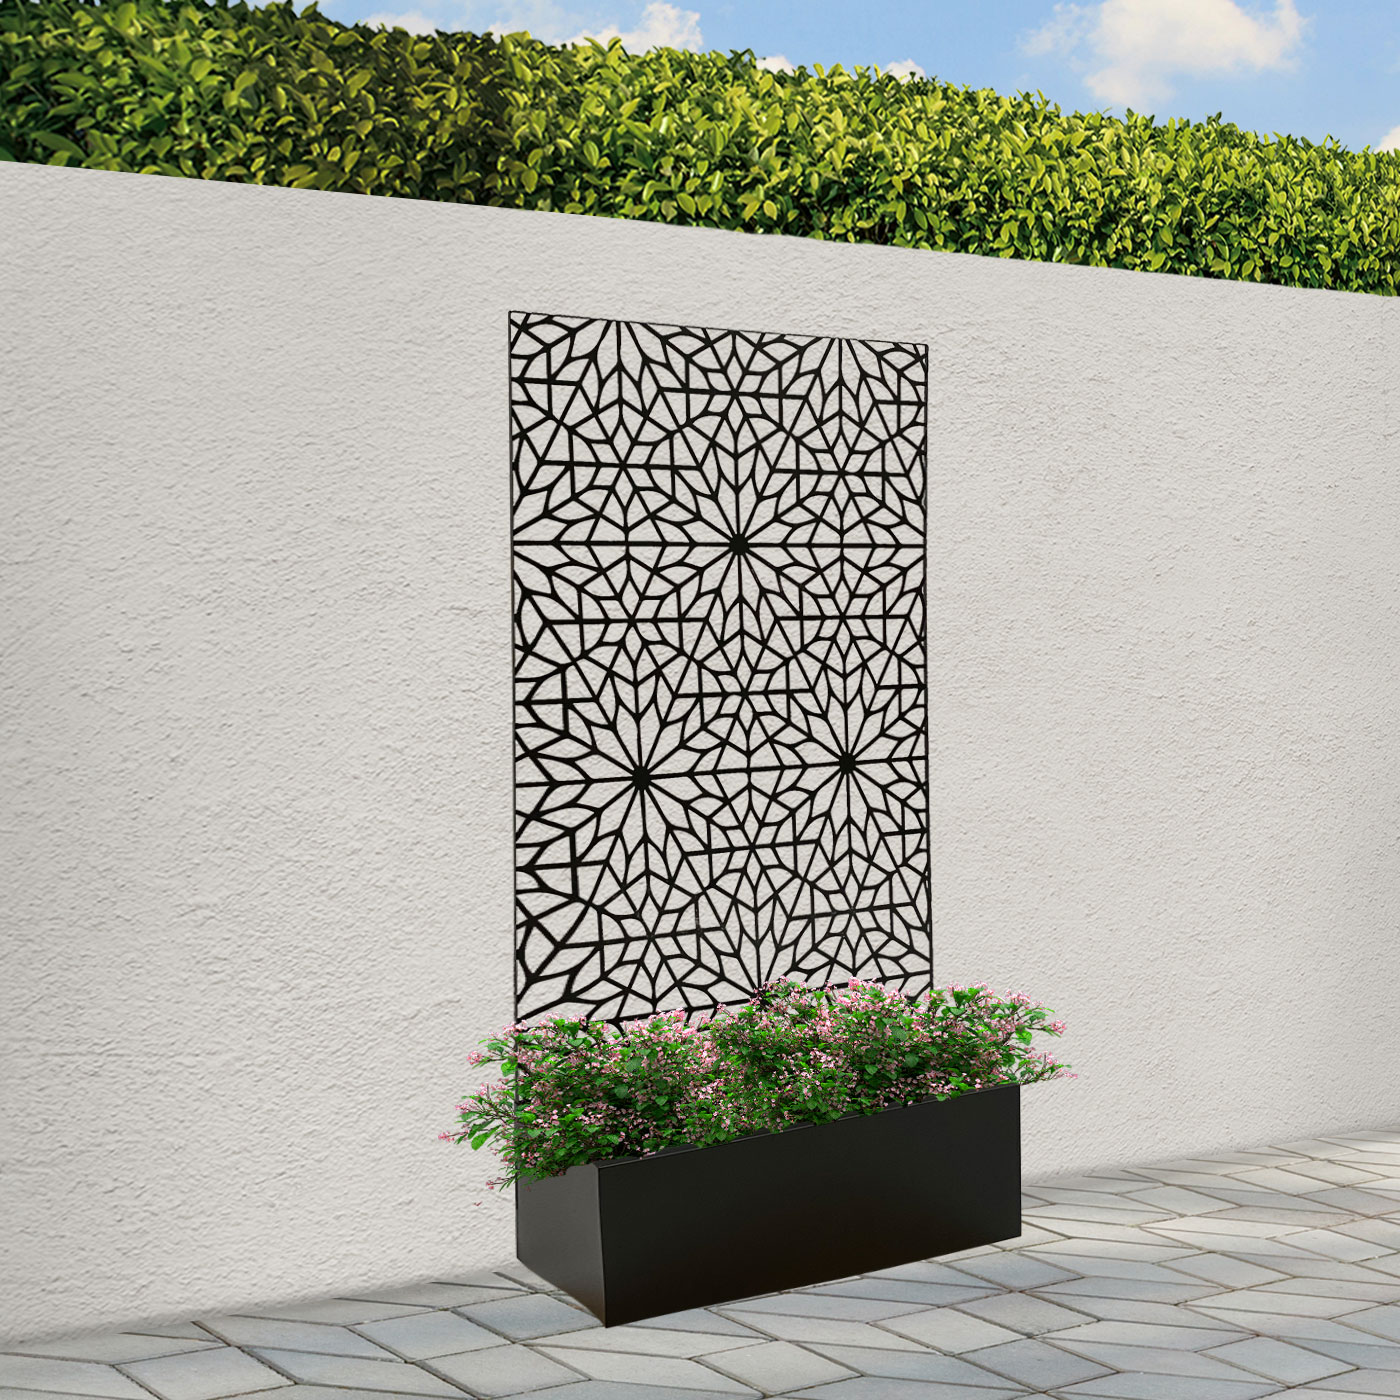 Image of Black rectangular planter with geometric pattern